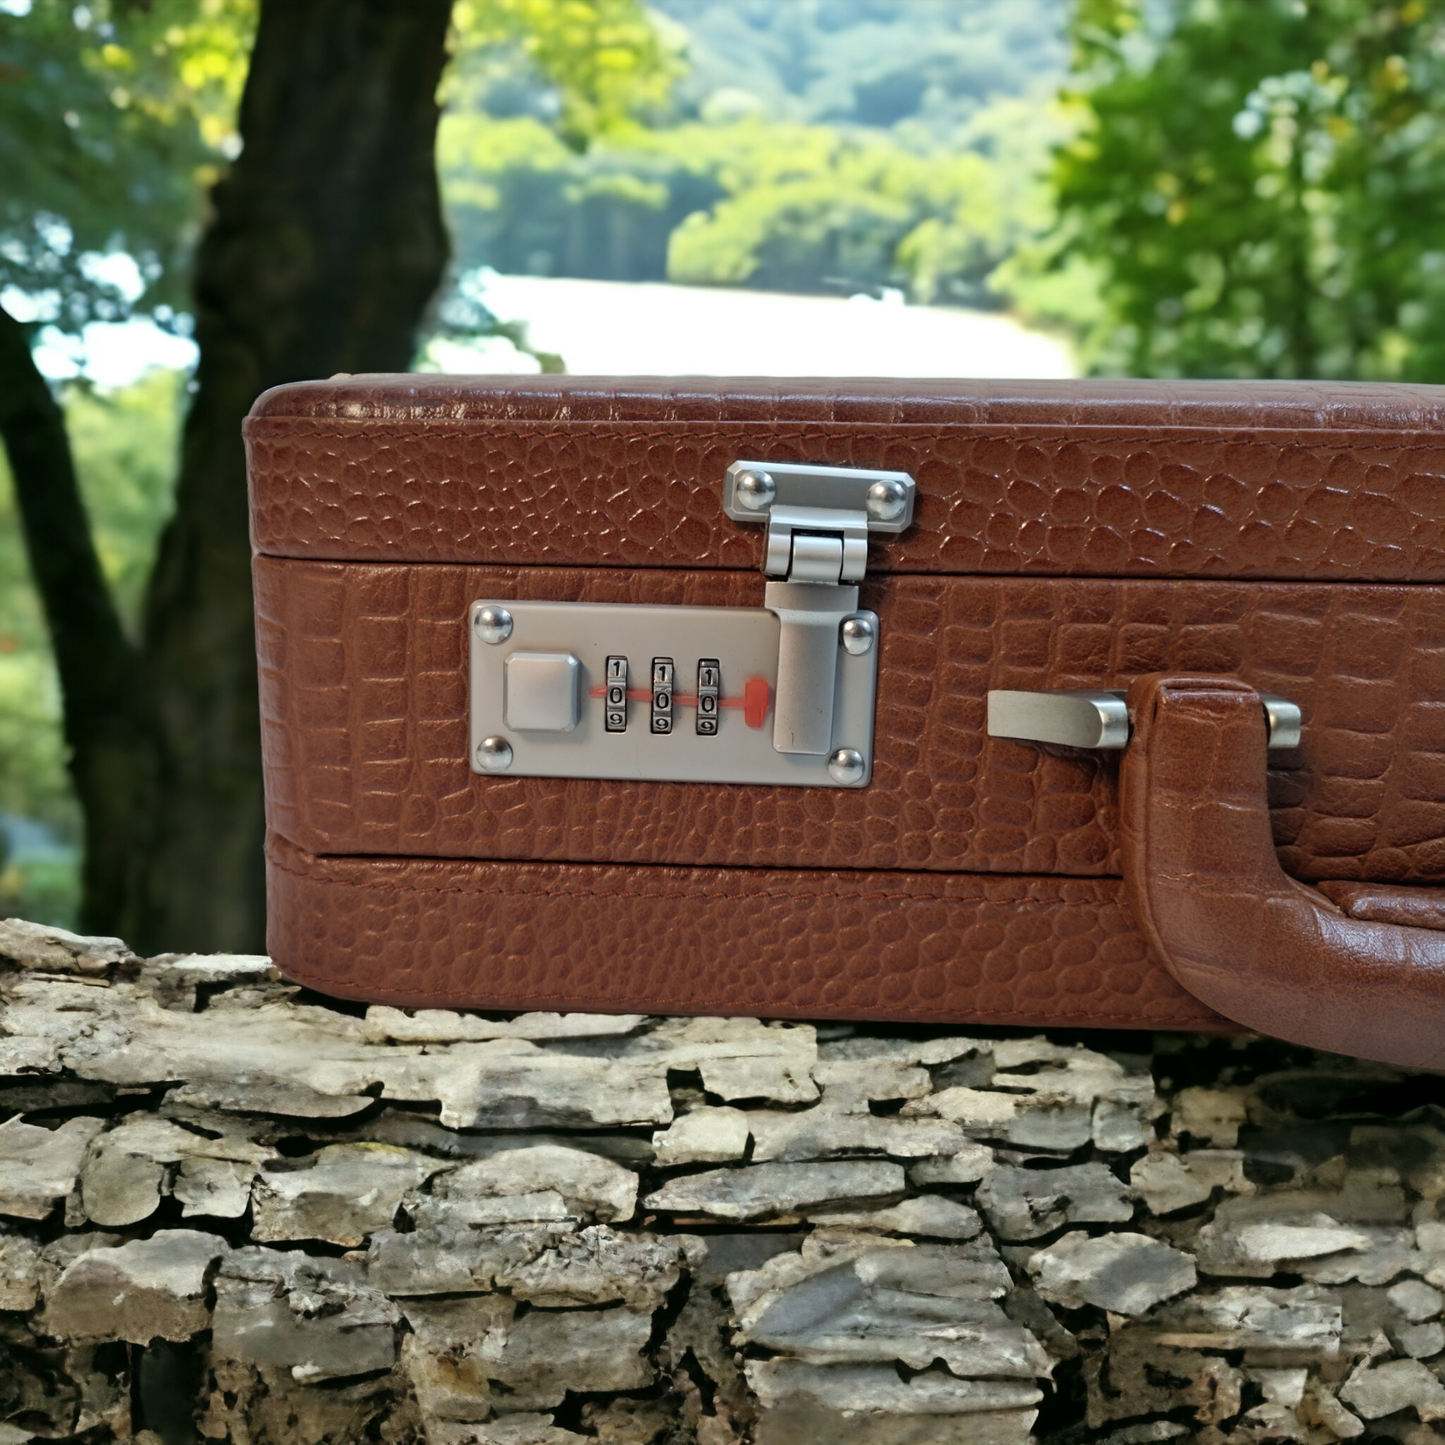 Premium Leather Briefcase for Men | Leather Expandable Briefcase | Leather Attache Briefcase for Men's | Doctors Briefcase | Men's Leather Handbag